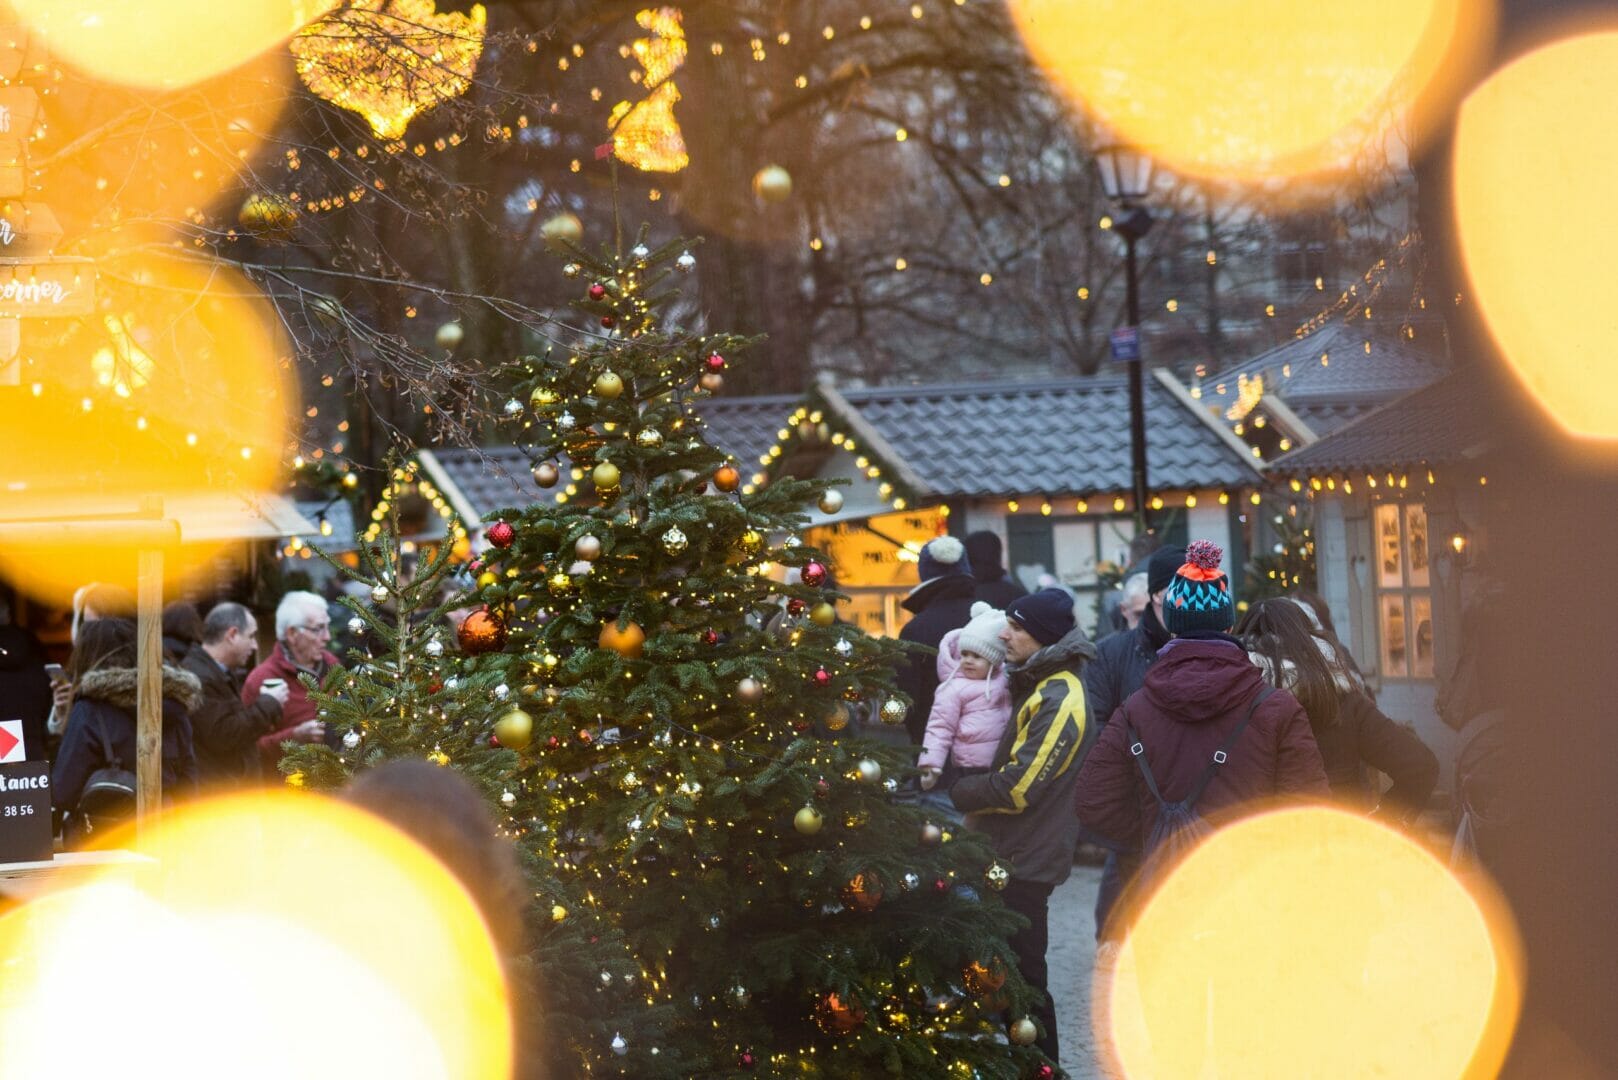 Enjoy a traditional Swiss Christmas this festive season with Geneva Tourism